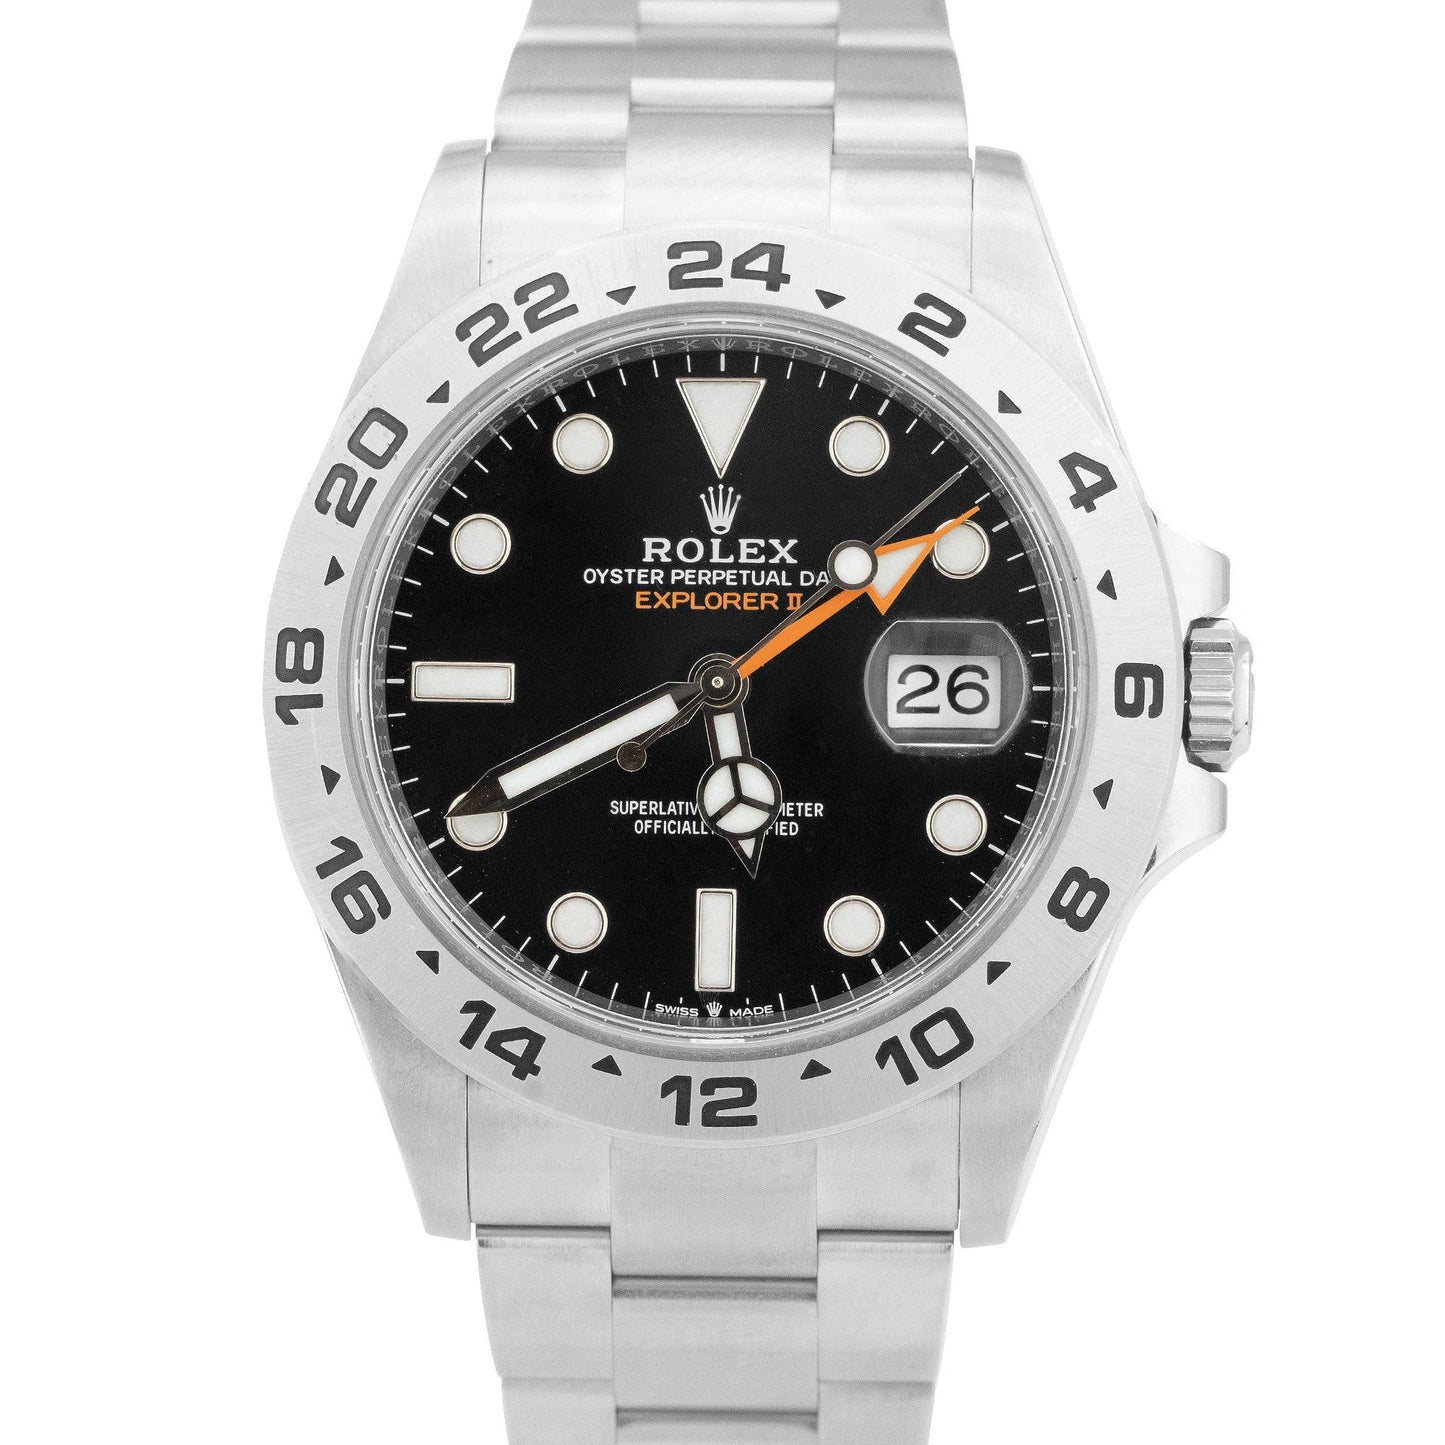 NEW AUG 2022 Rolex Explorer II 42mm Black Orange Stainless GMT Date Watch 226570